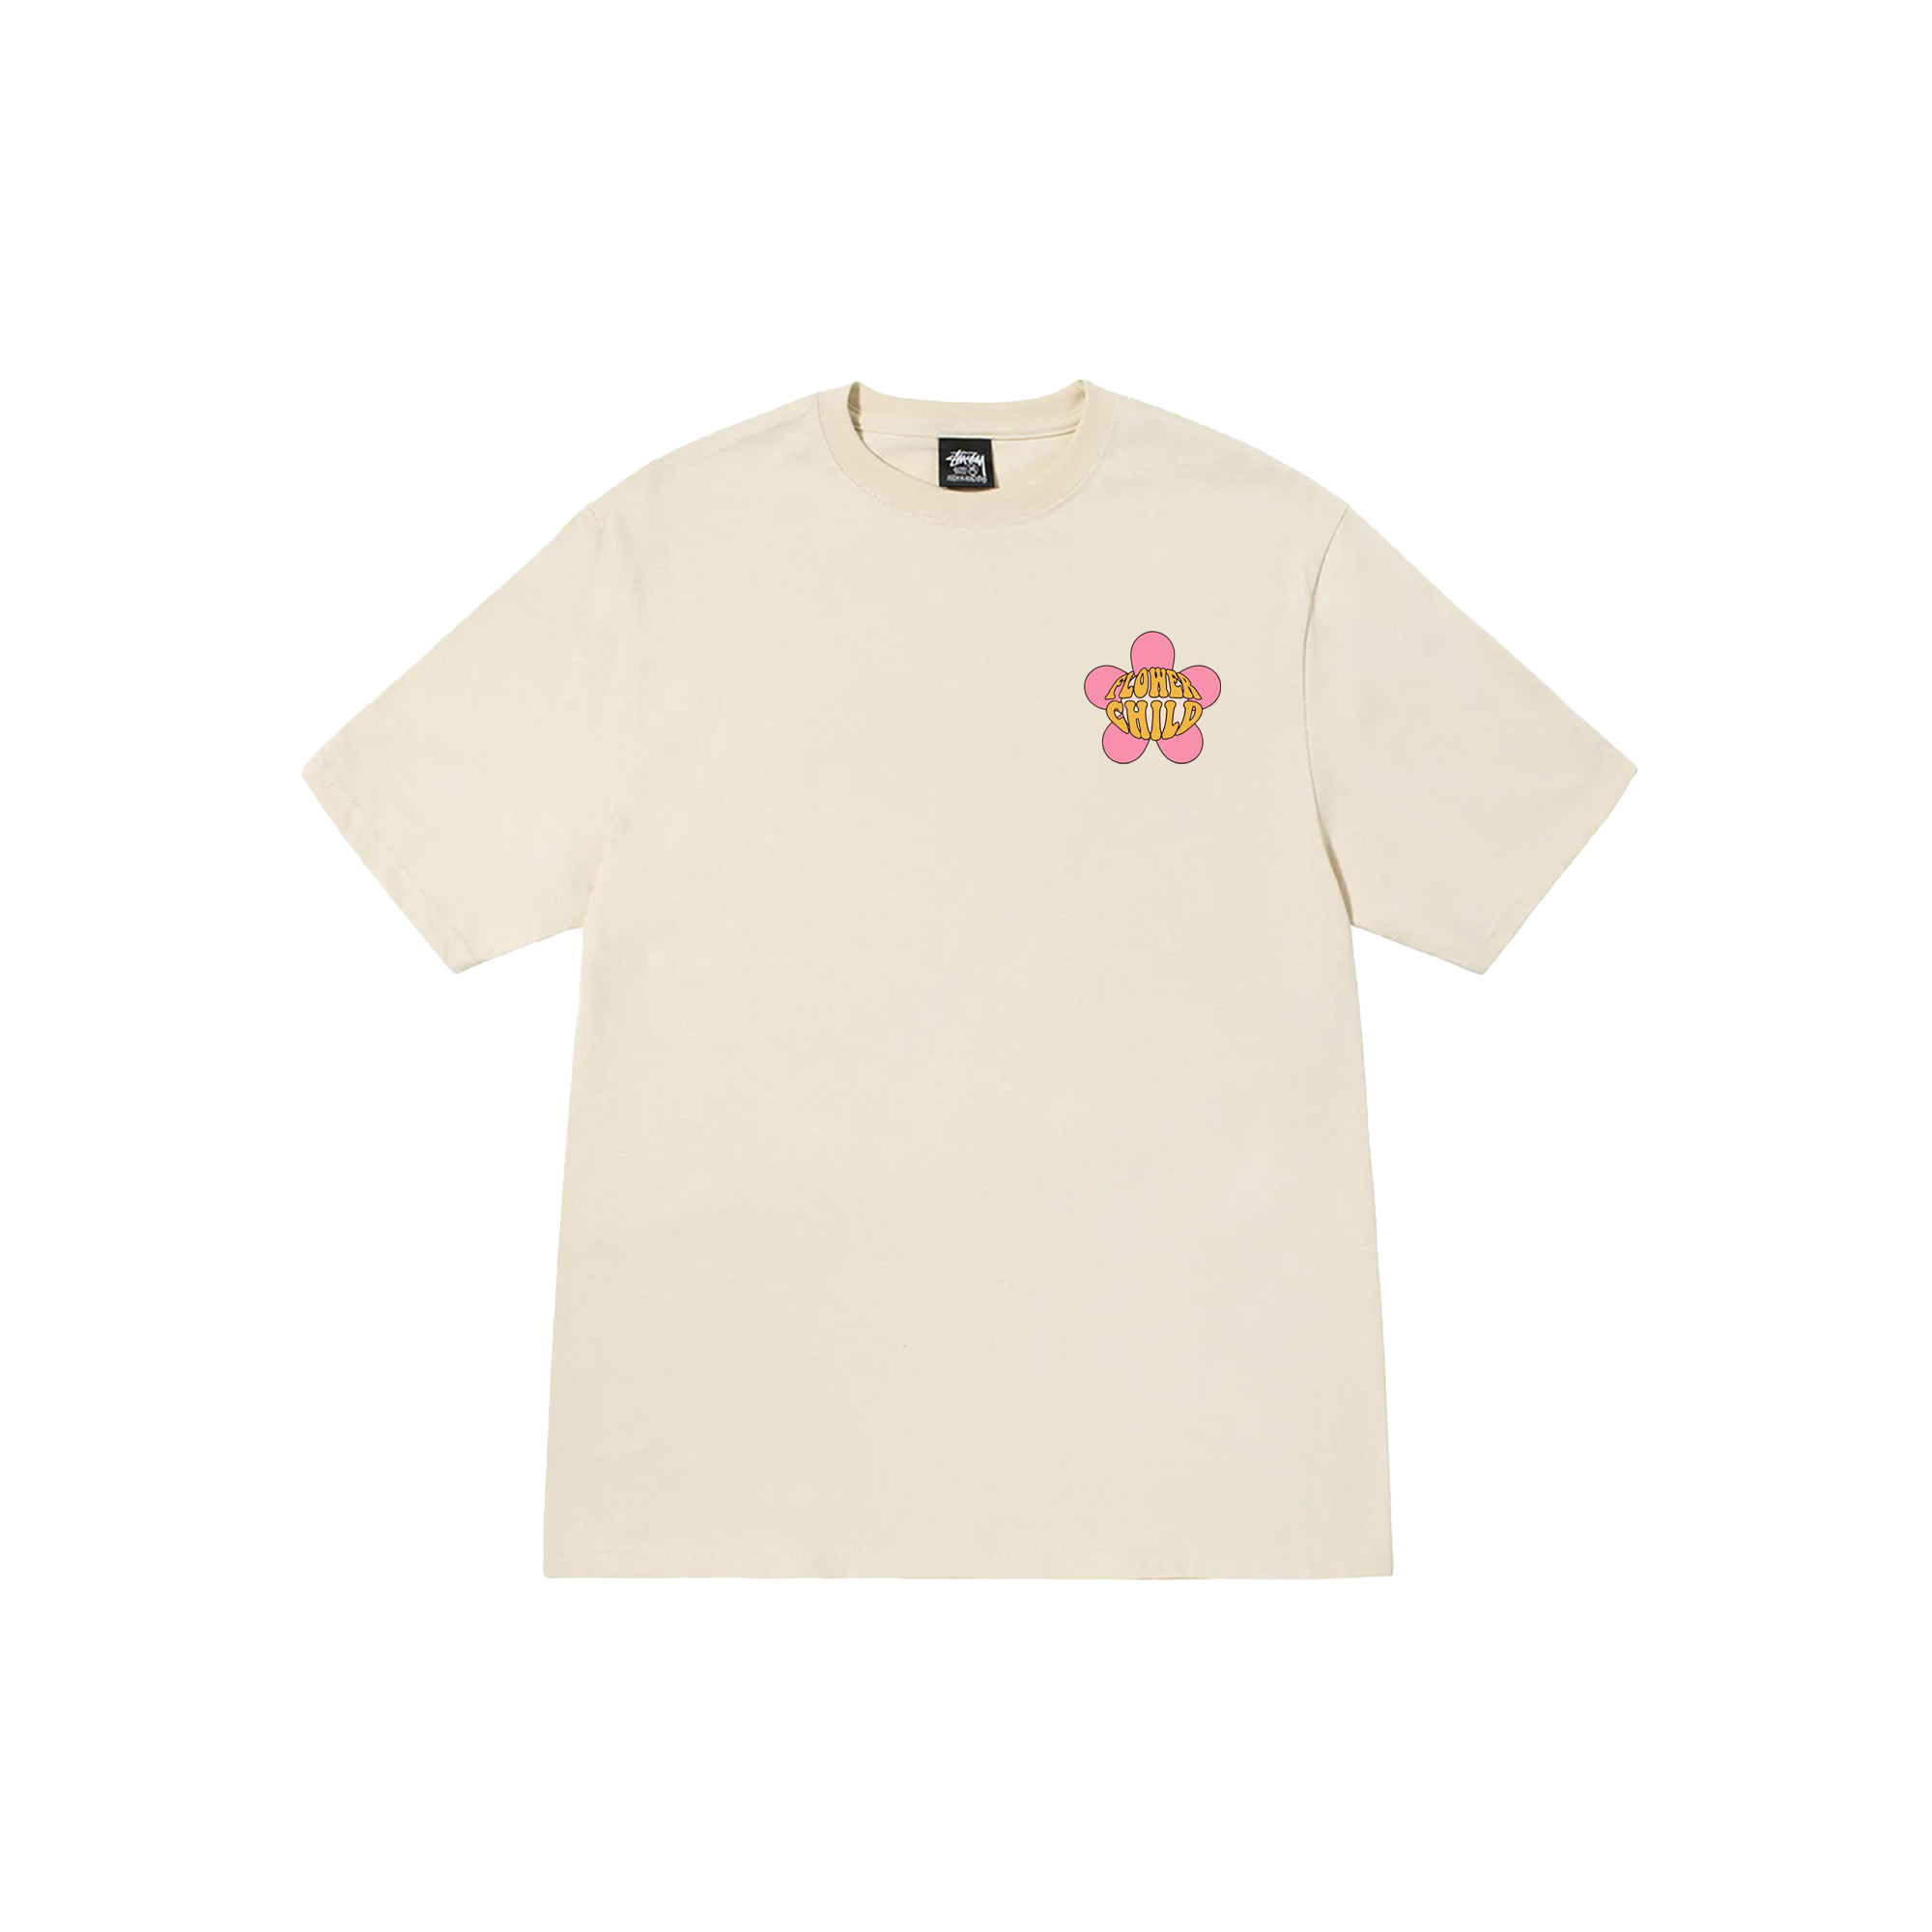 Stussy Floral Flower Child T-Shirt